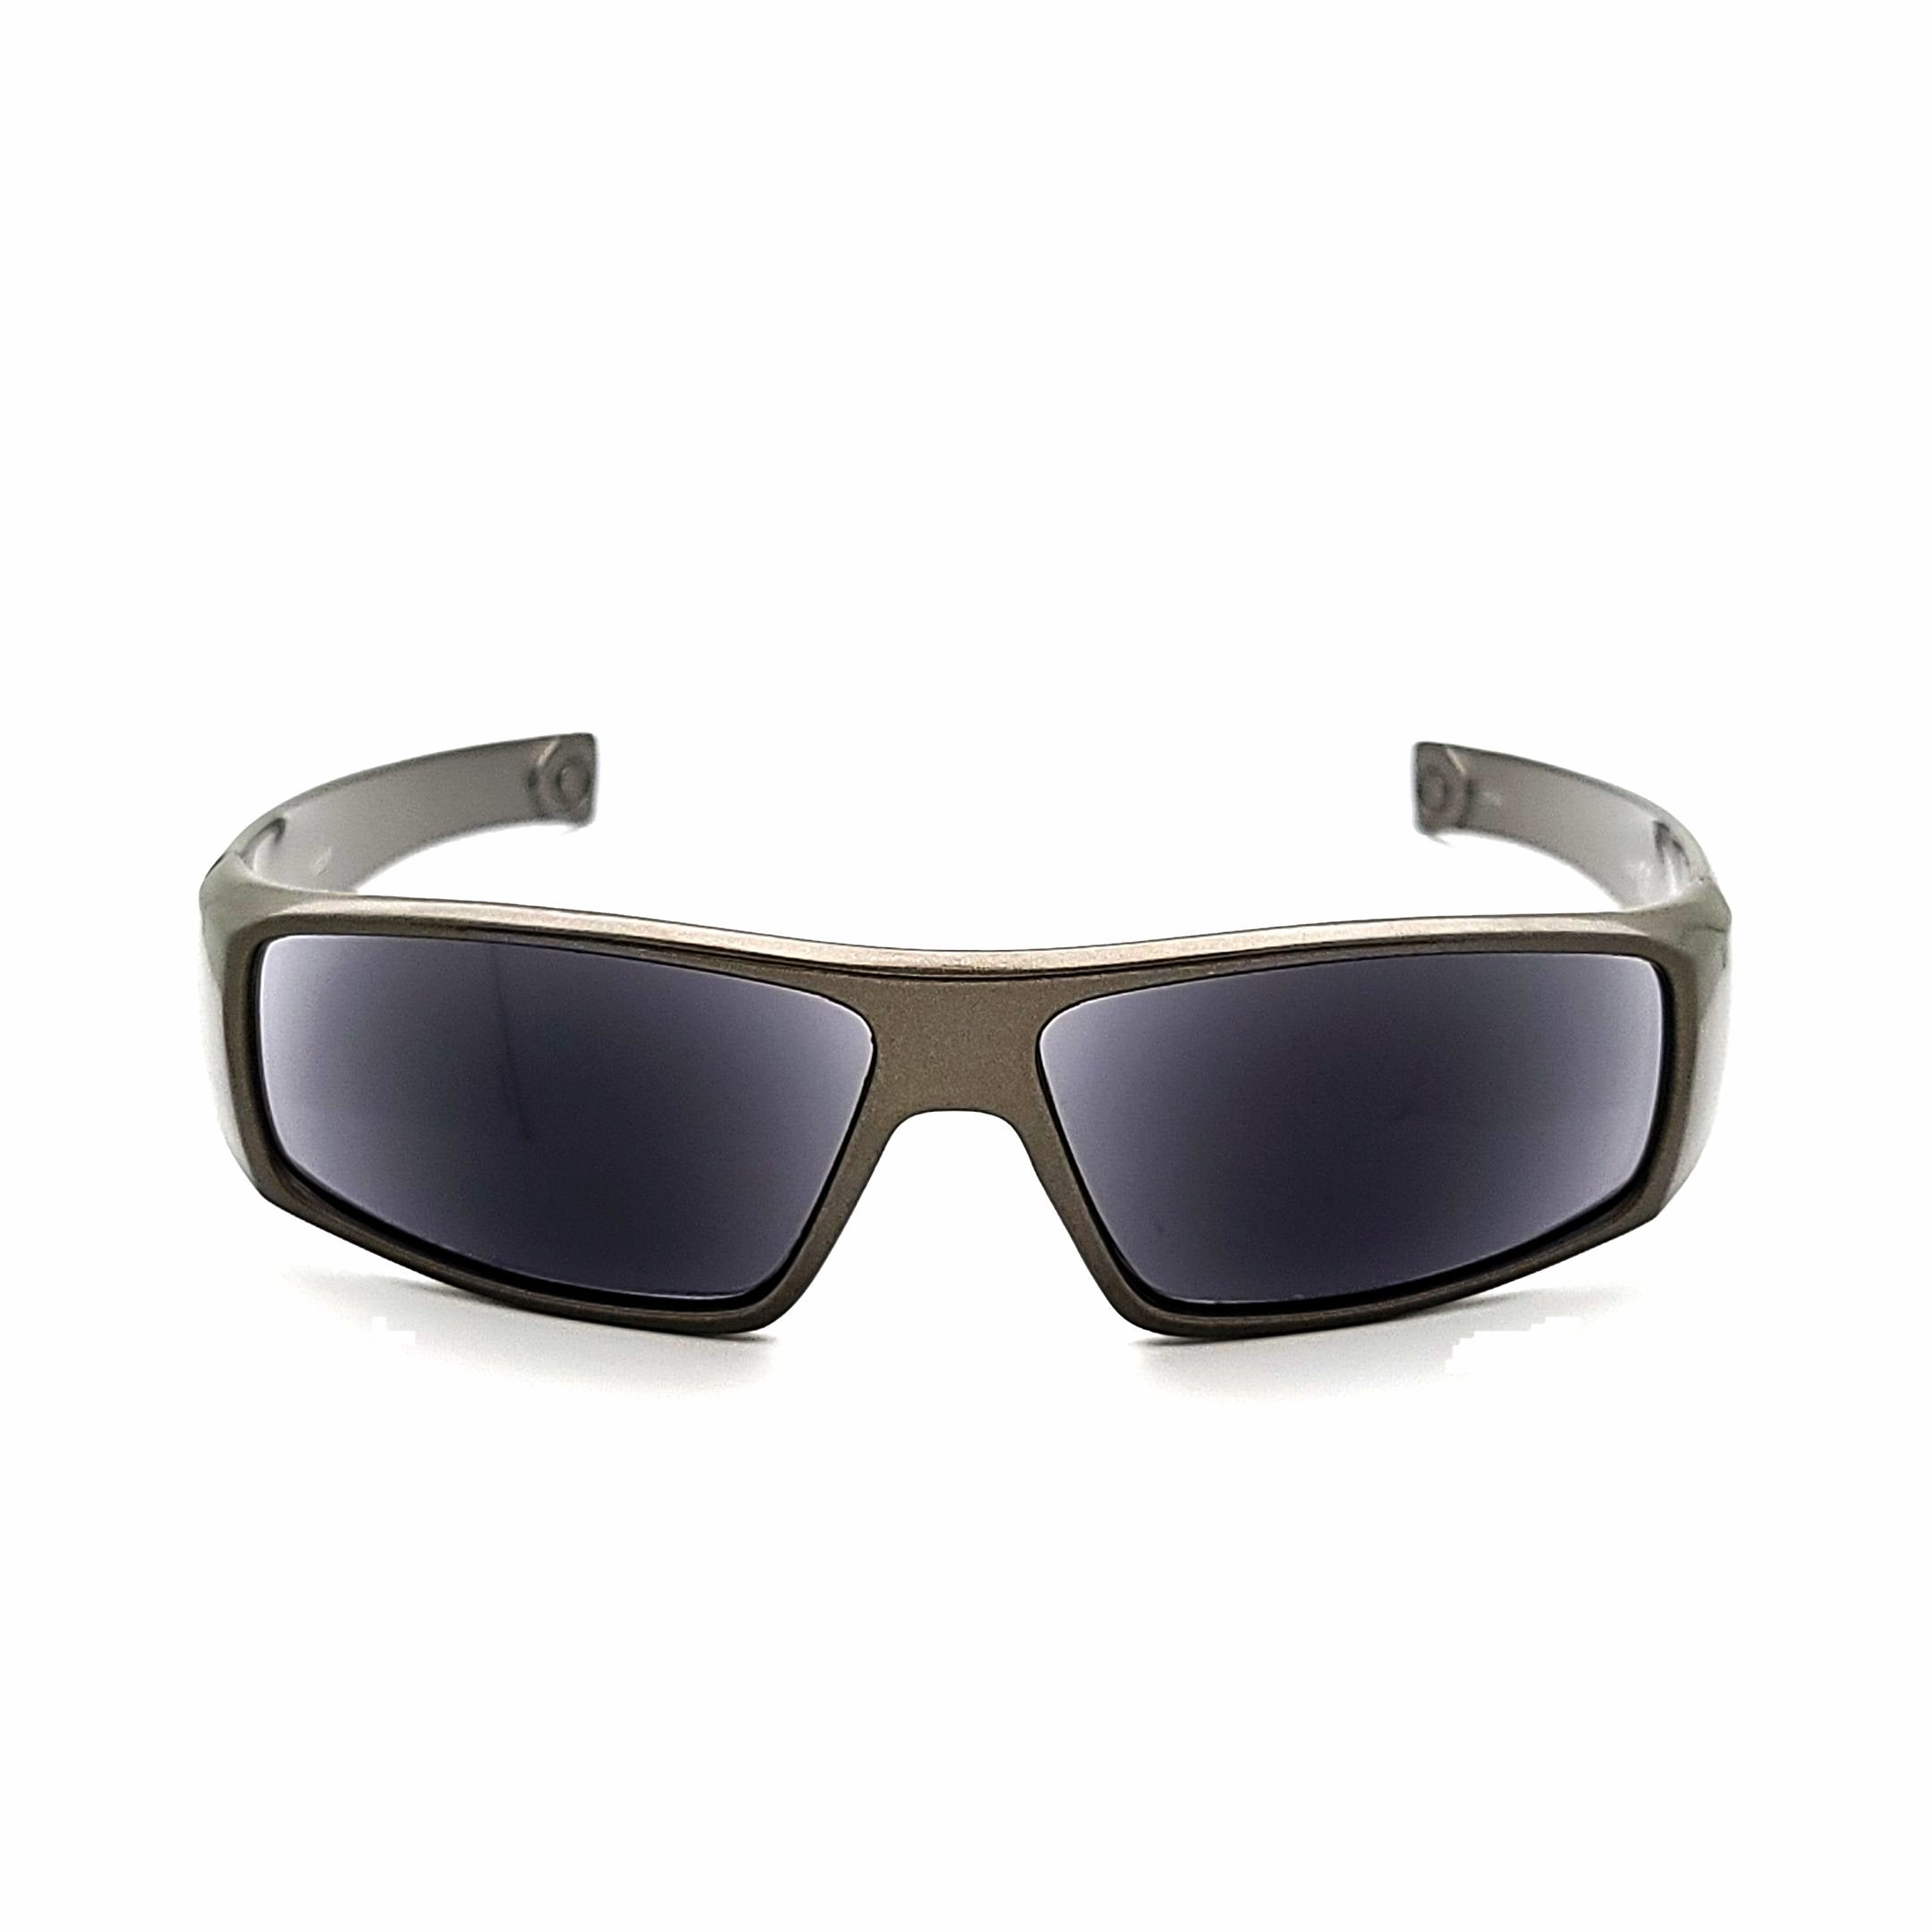 Over Glasses Sunglasses for Men Women, Wrap Around Sunglasses UV Protection  Polarized Sports Sunglasses for Driving